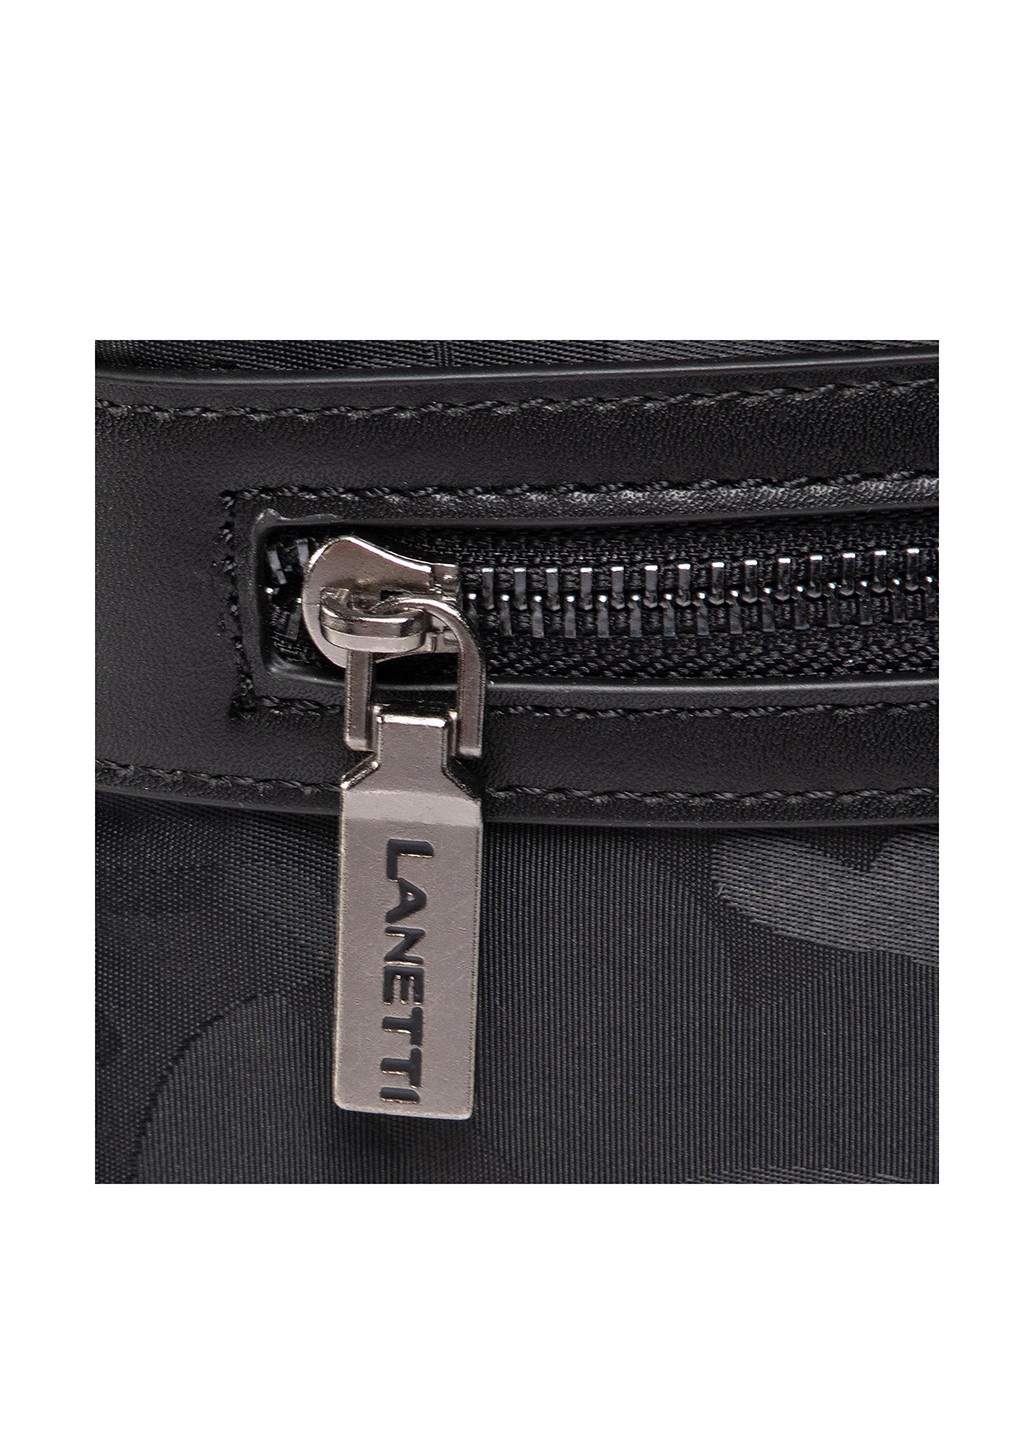 Сумка чоловіча BMR-S-010-12-04 Lanetti планшет камуфляжная тёмно-серая кэжуал